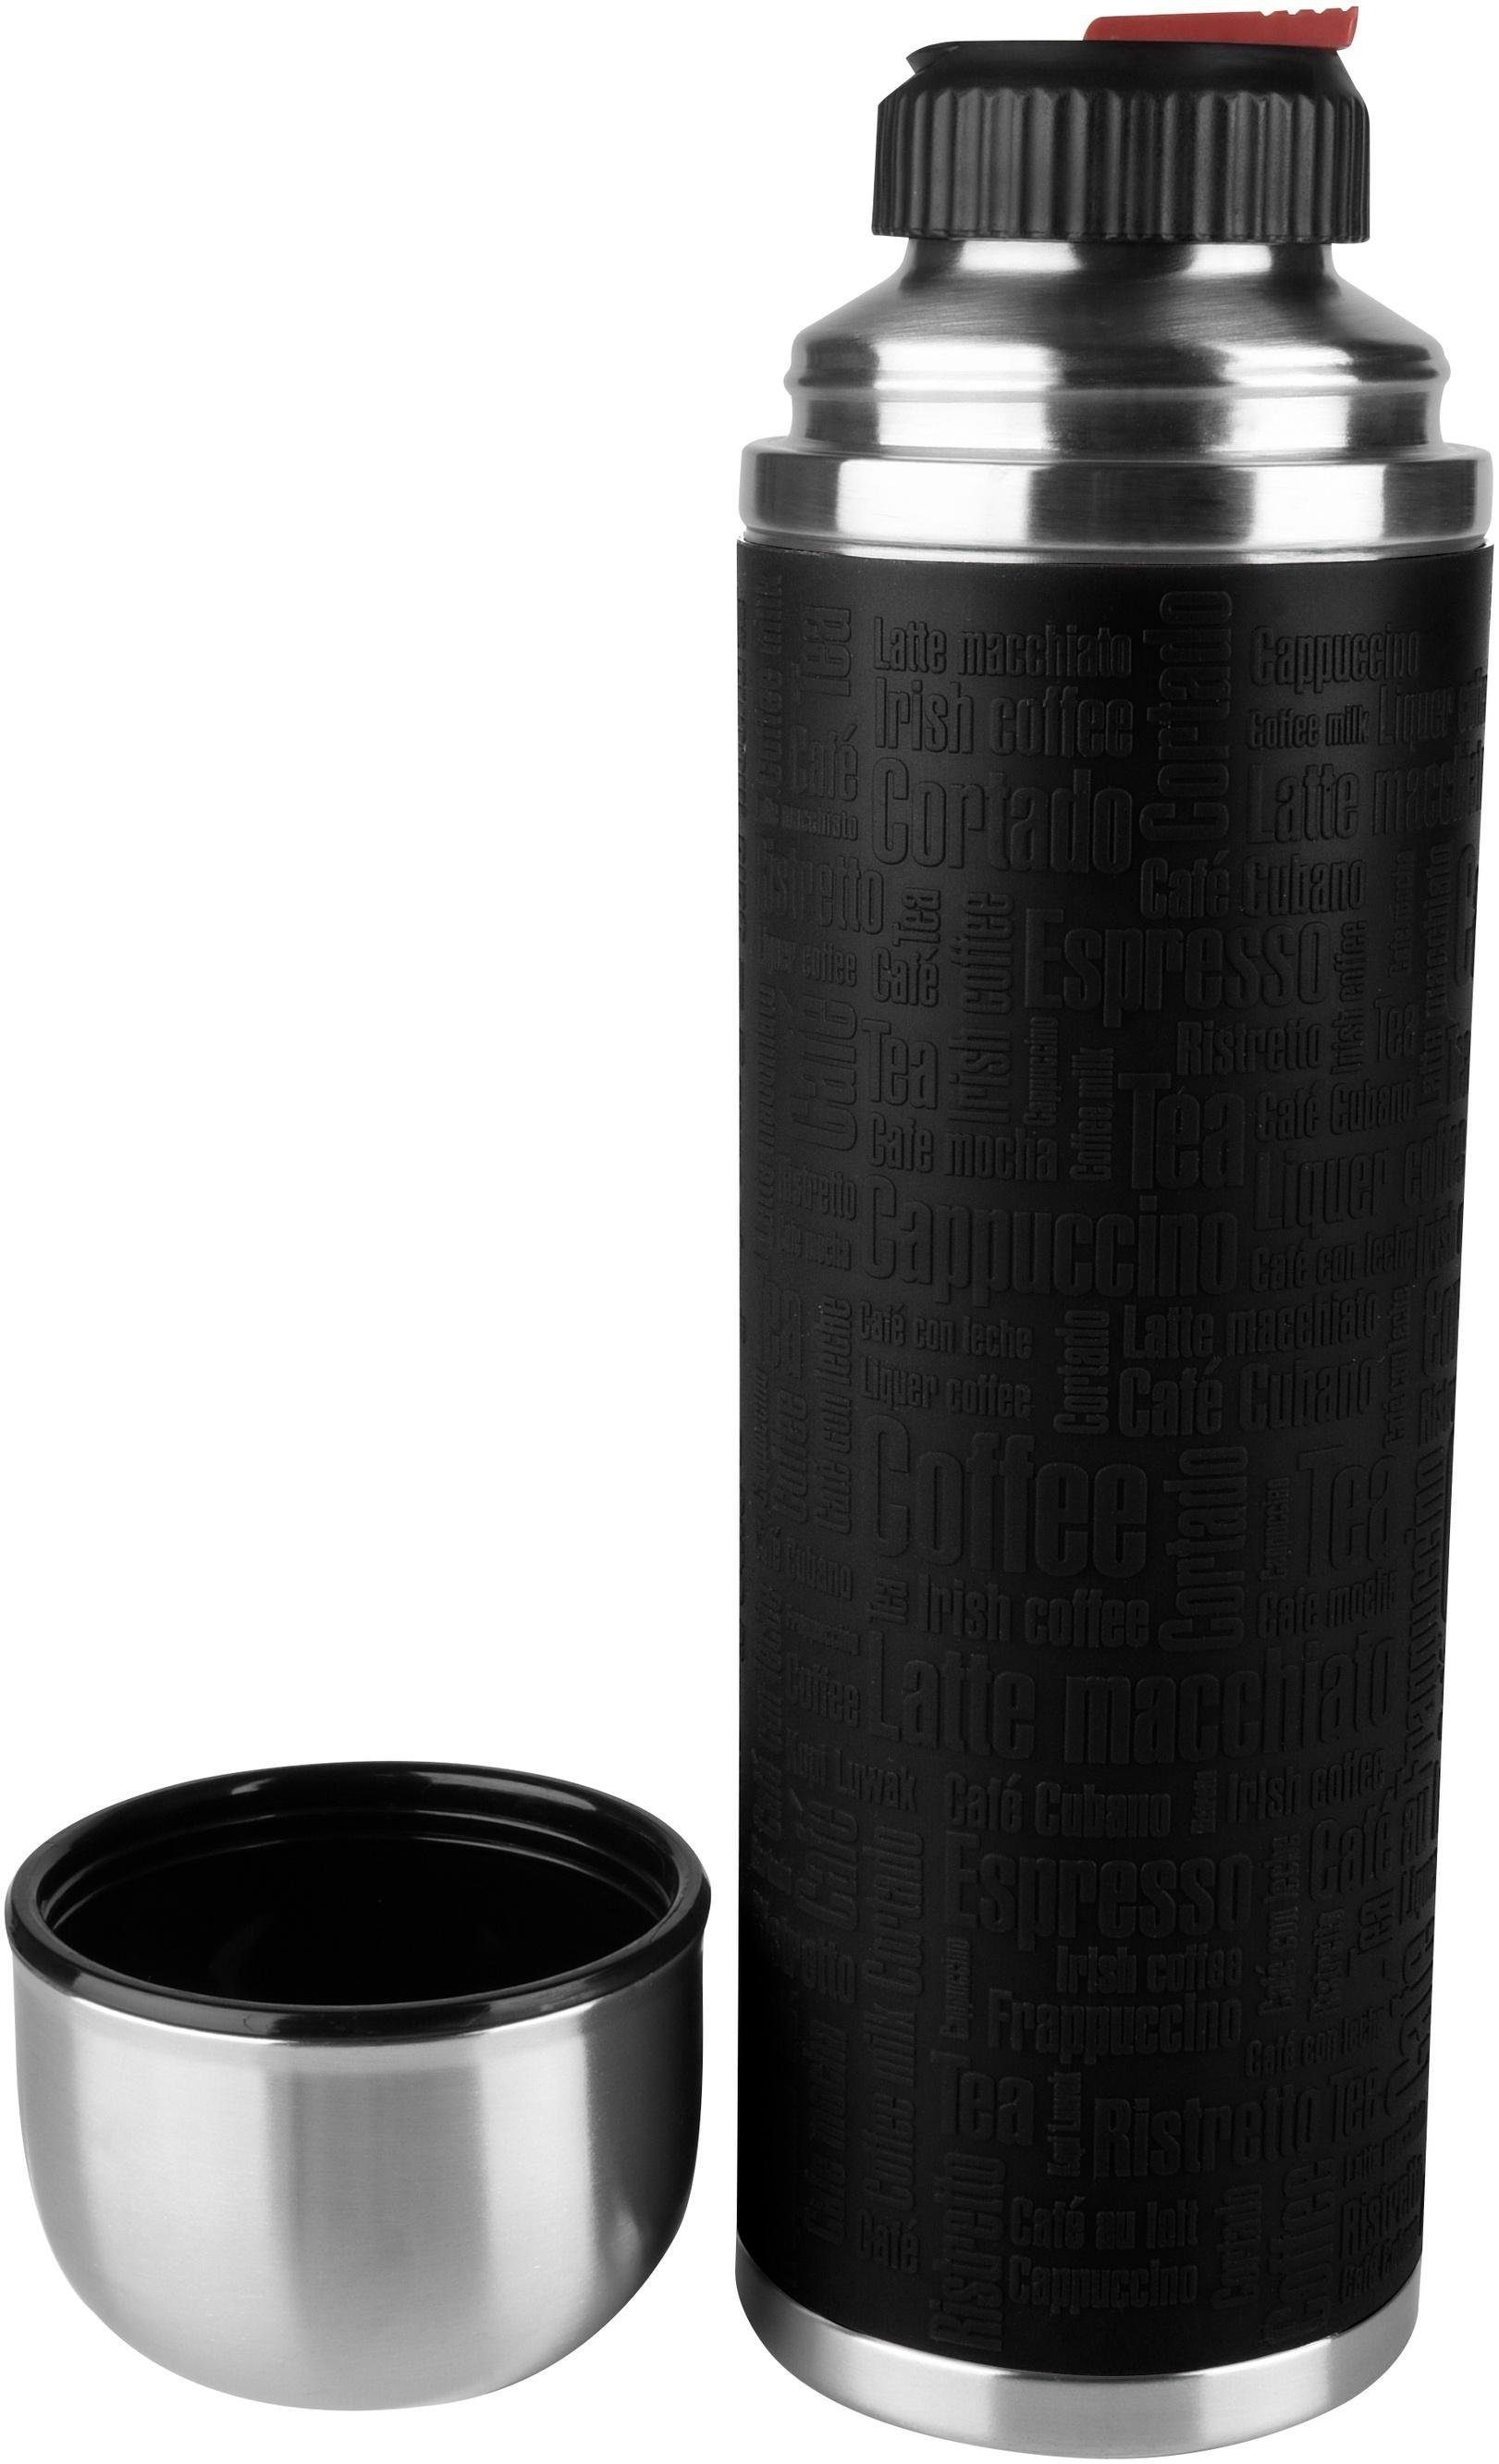 Emsa Thermoflasche Senator Class, 1,0 L, Edelstahl/Silikonmanschette, 100% dicht schwarz-edelstahlfarben